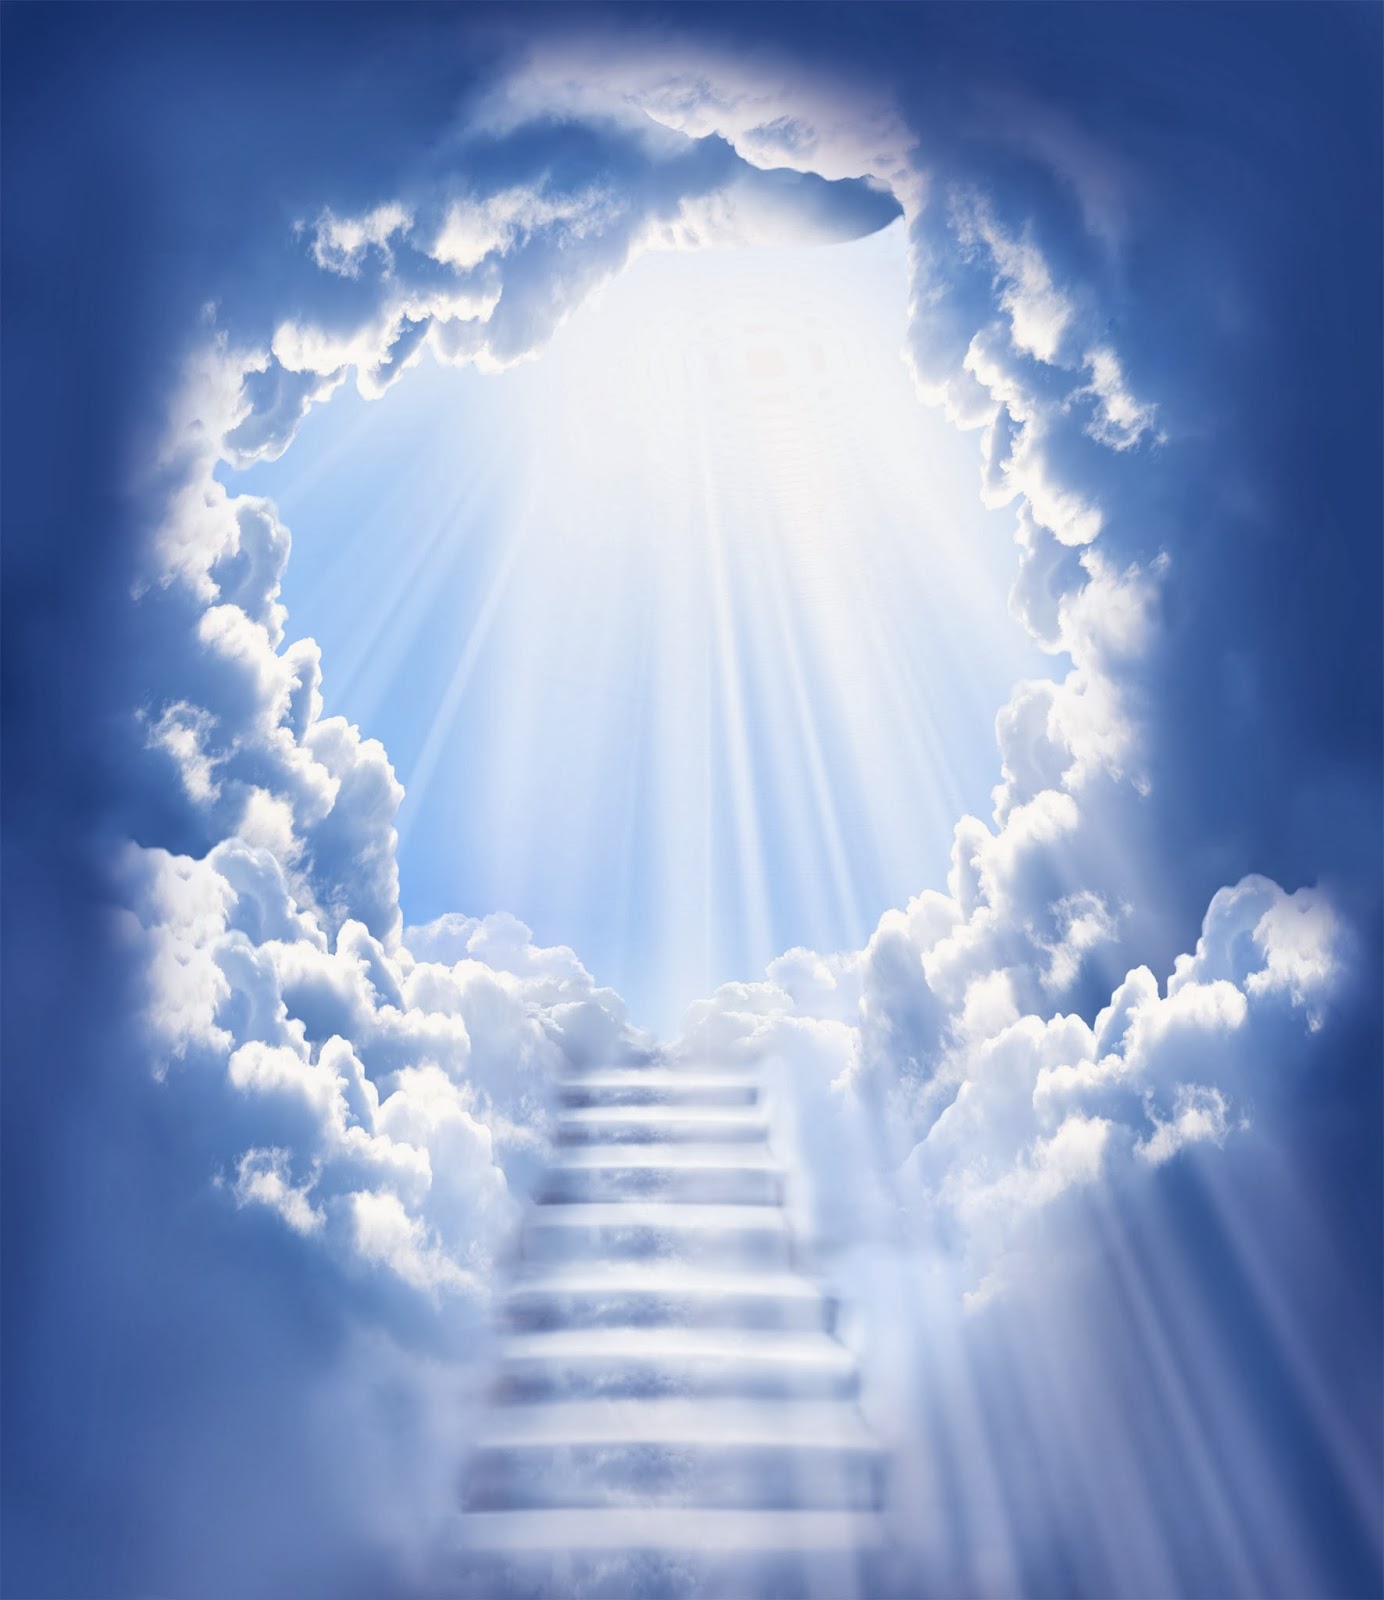 http://2.bp.blogspot.com/-5DcYZRiKSvU/Ur0eF9uvhmI/AAAAAAAAAeE/4K-5r3dAuEc/s1600/stairs-to-heaven.jpg